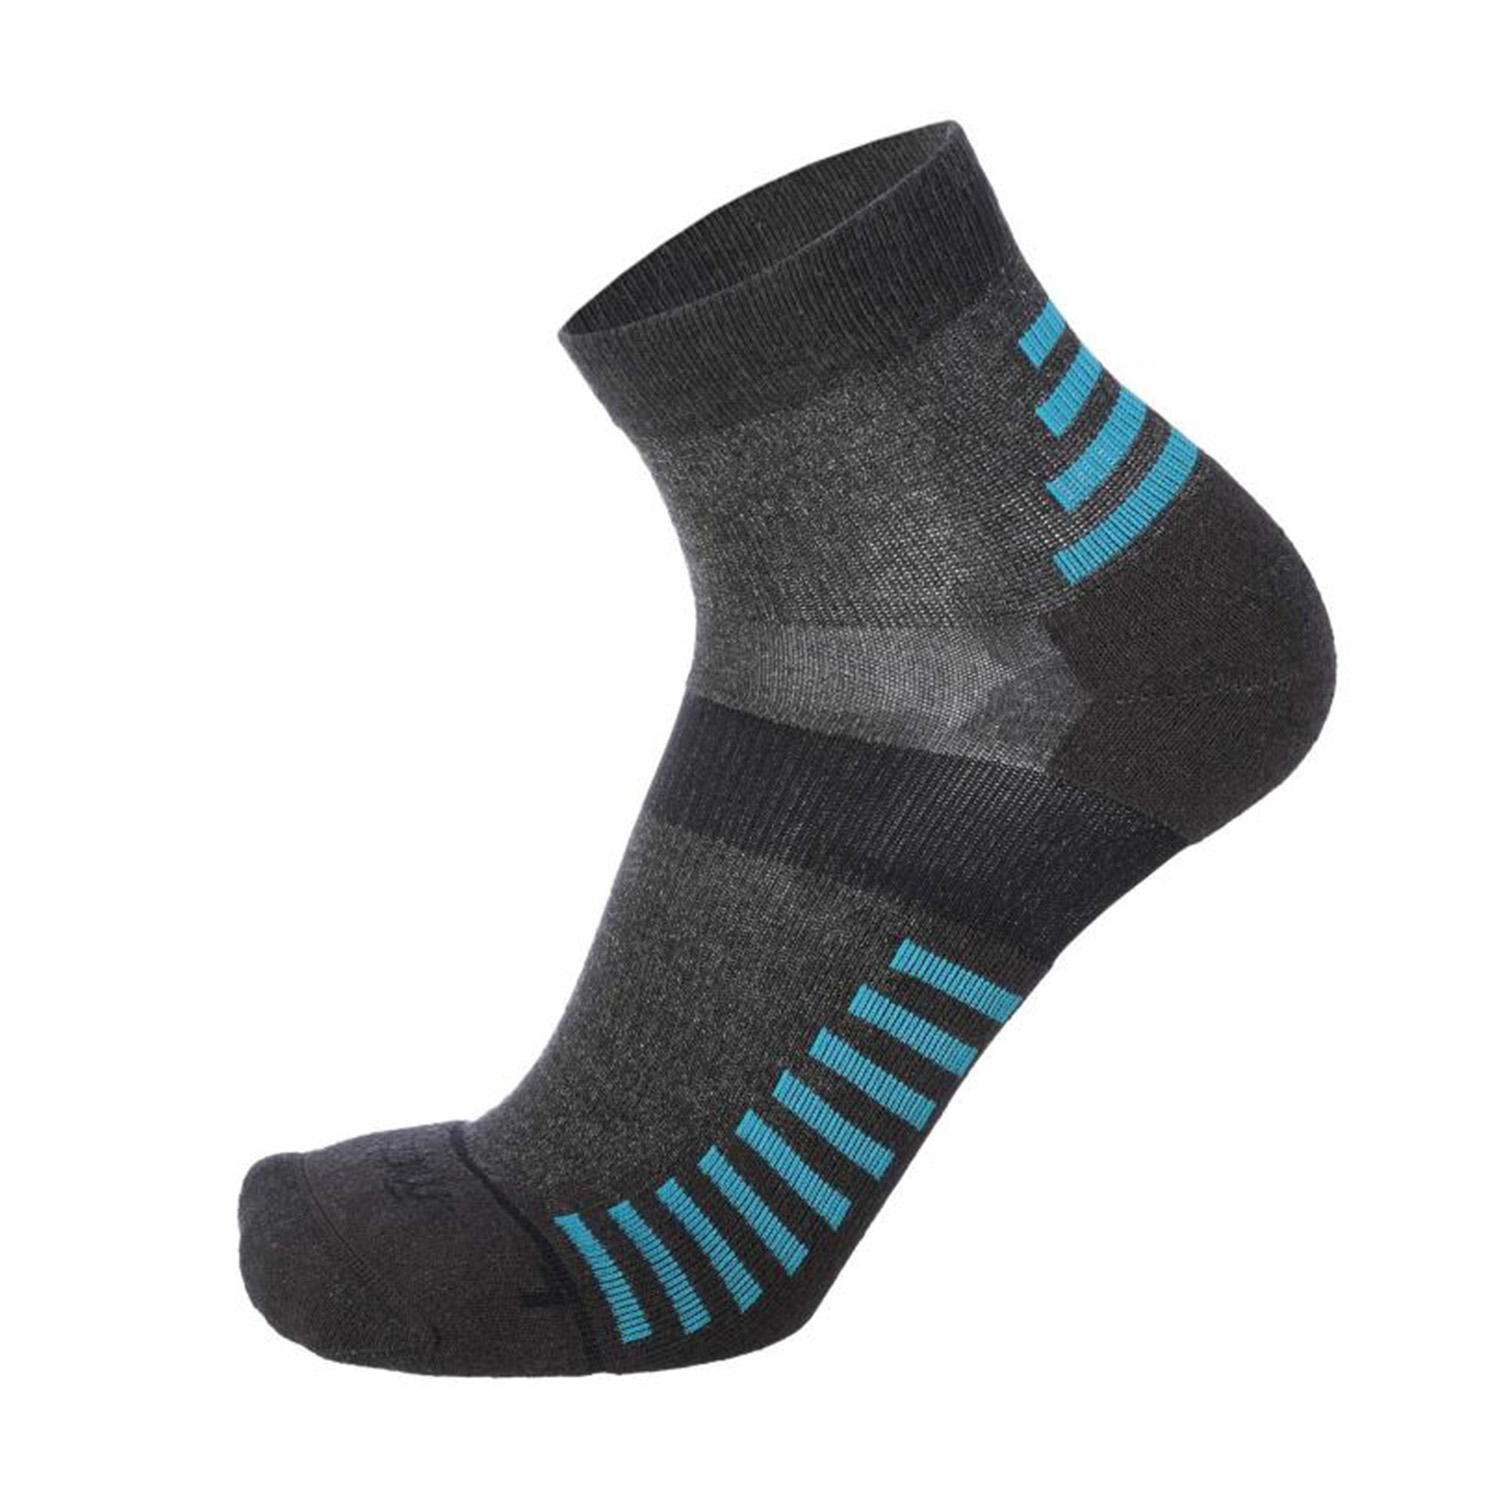 Mico Extra Dry Medium Weight Outdoor Socks - Antracite Melange